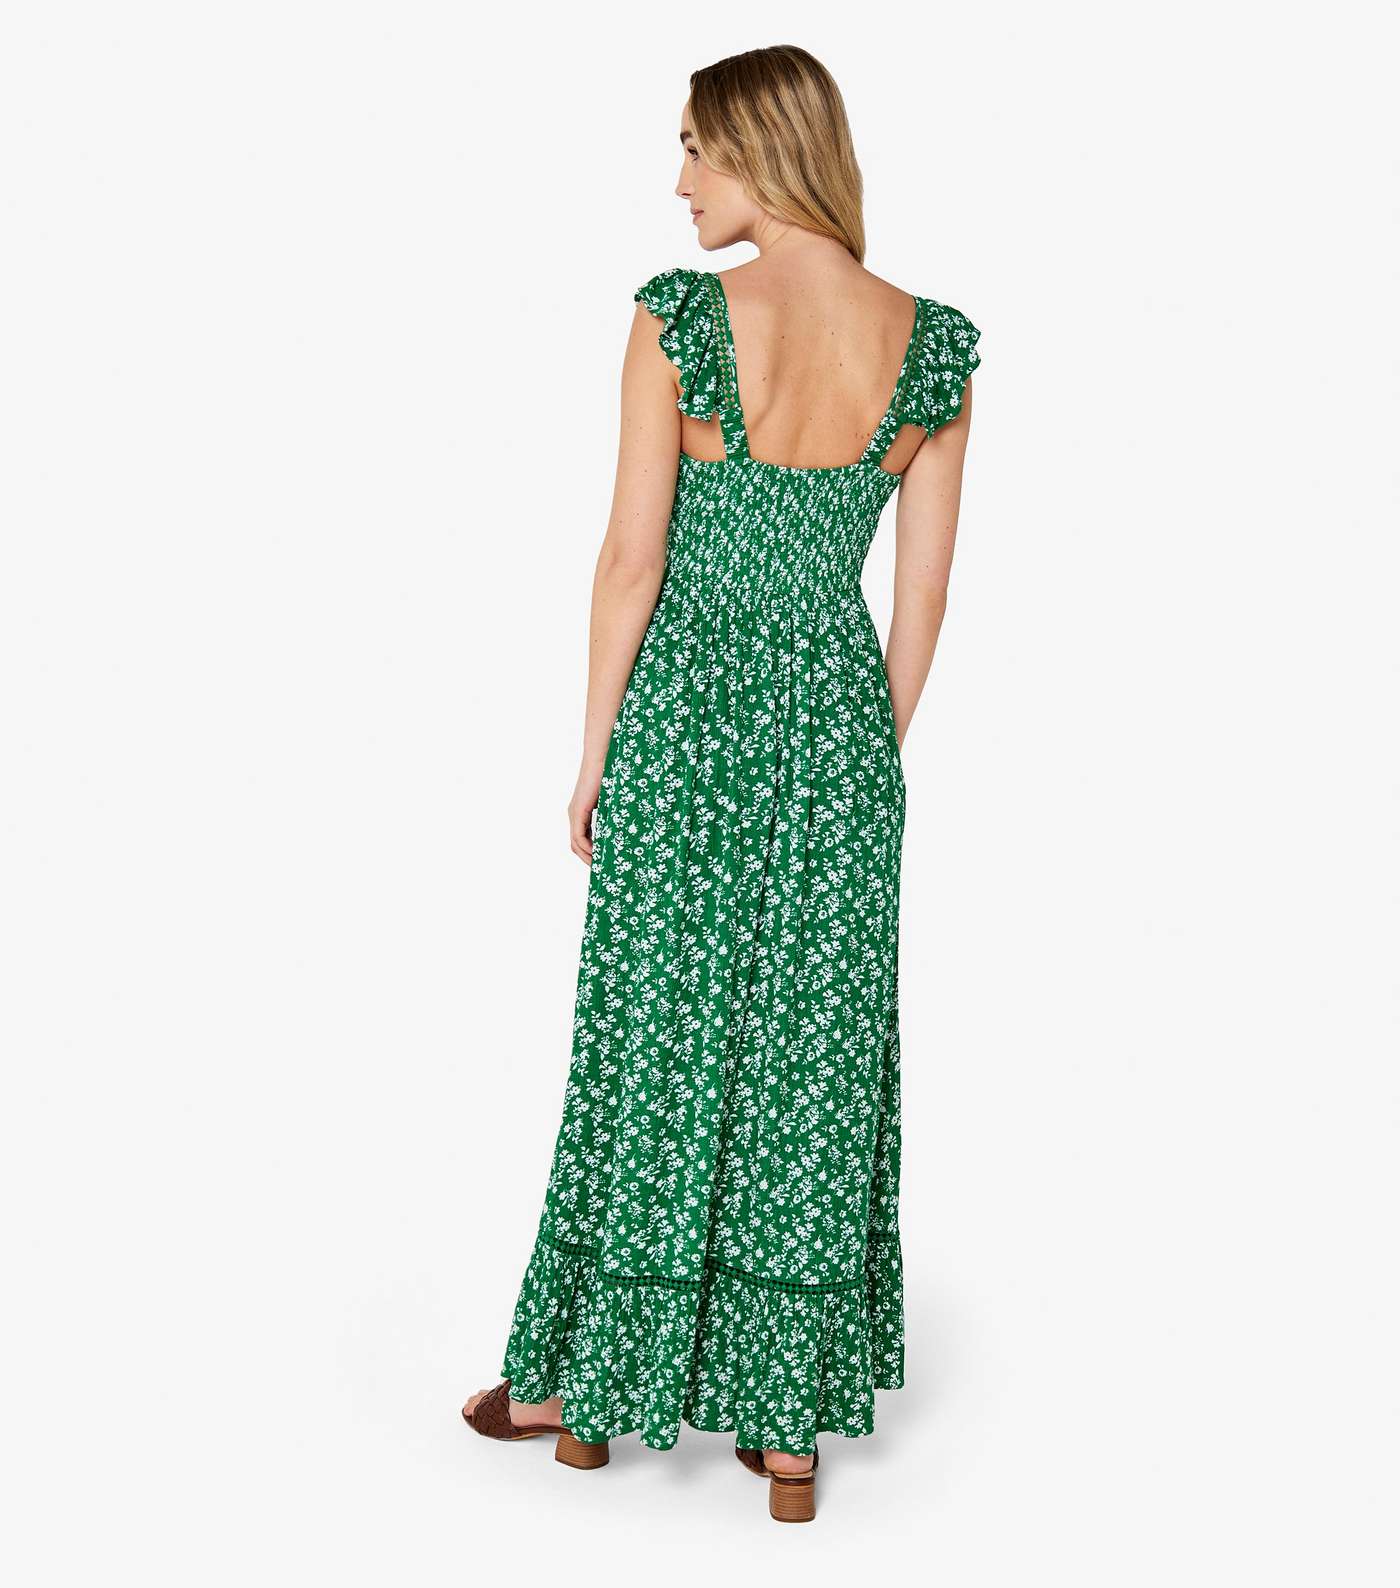 Apricot Green Floral Maxi Dress Image 3